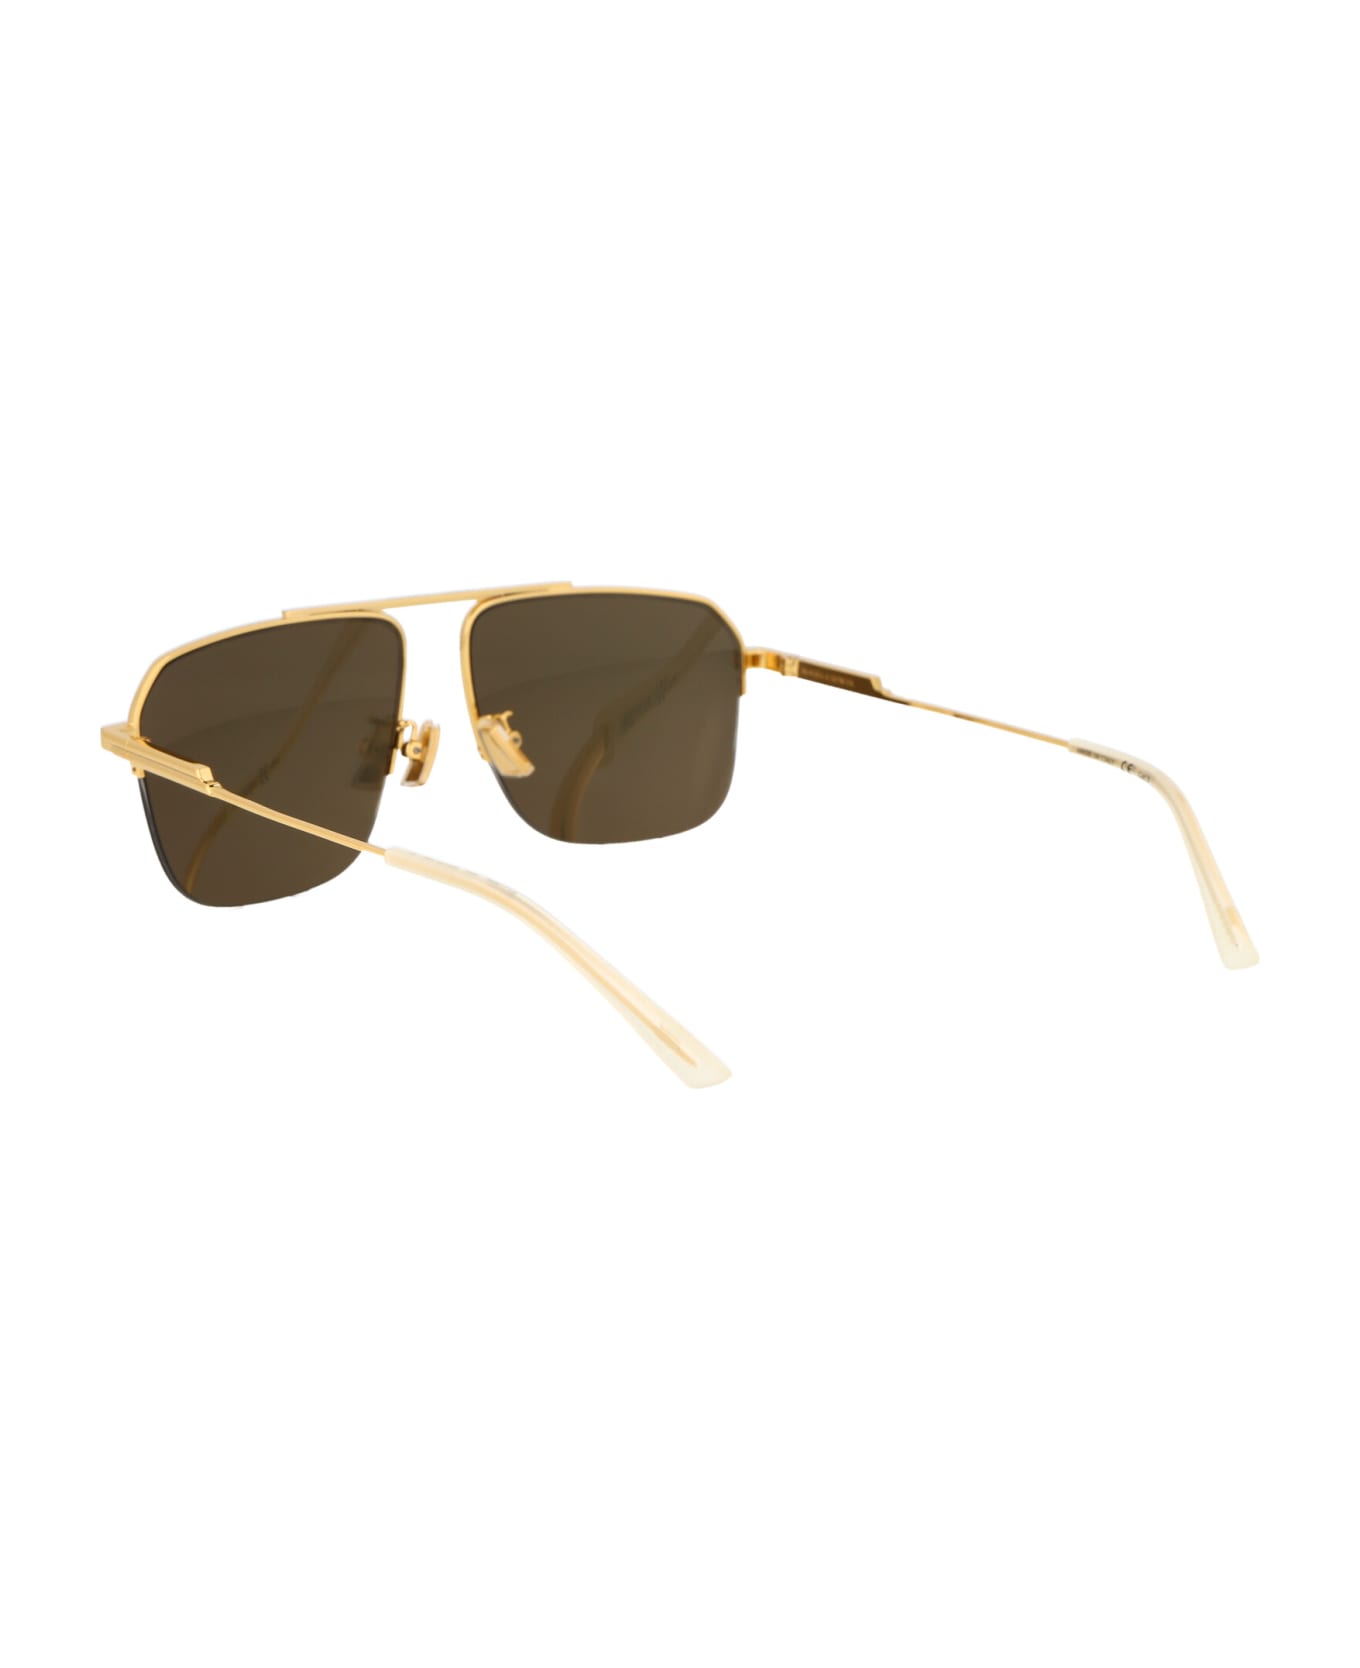 Bottega Veneta Eyewear Bv1149s Sunglasses - 005 GOLD GOLD GOLD